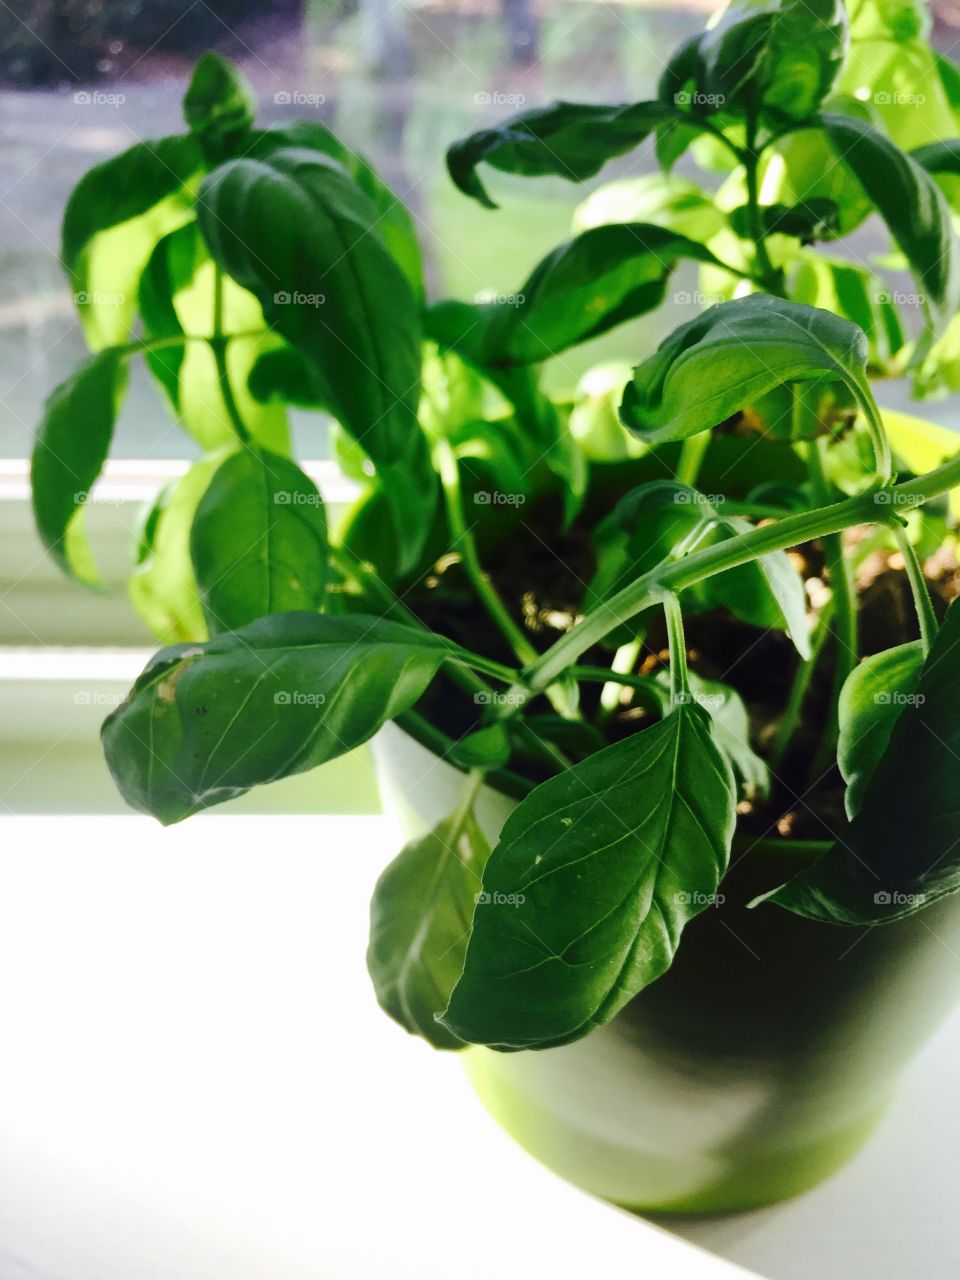 Windowsill herb plant